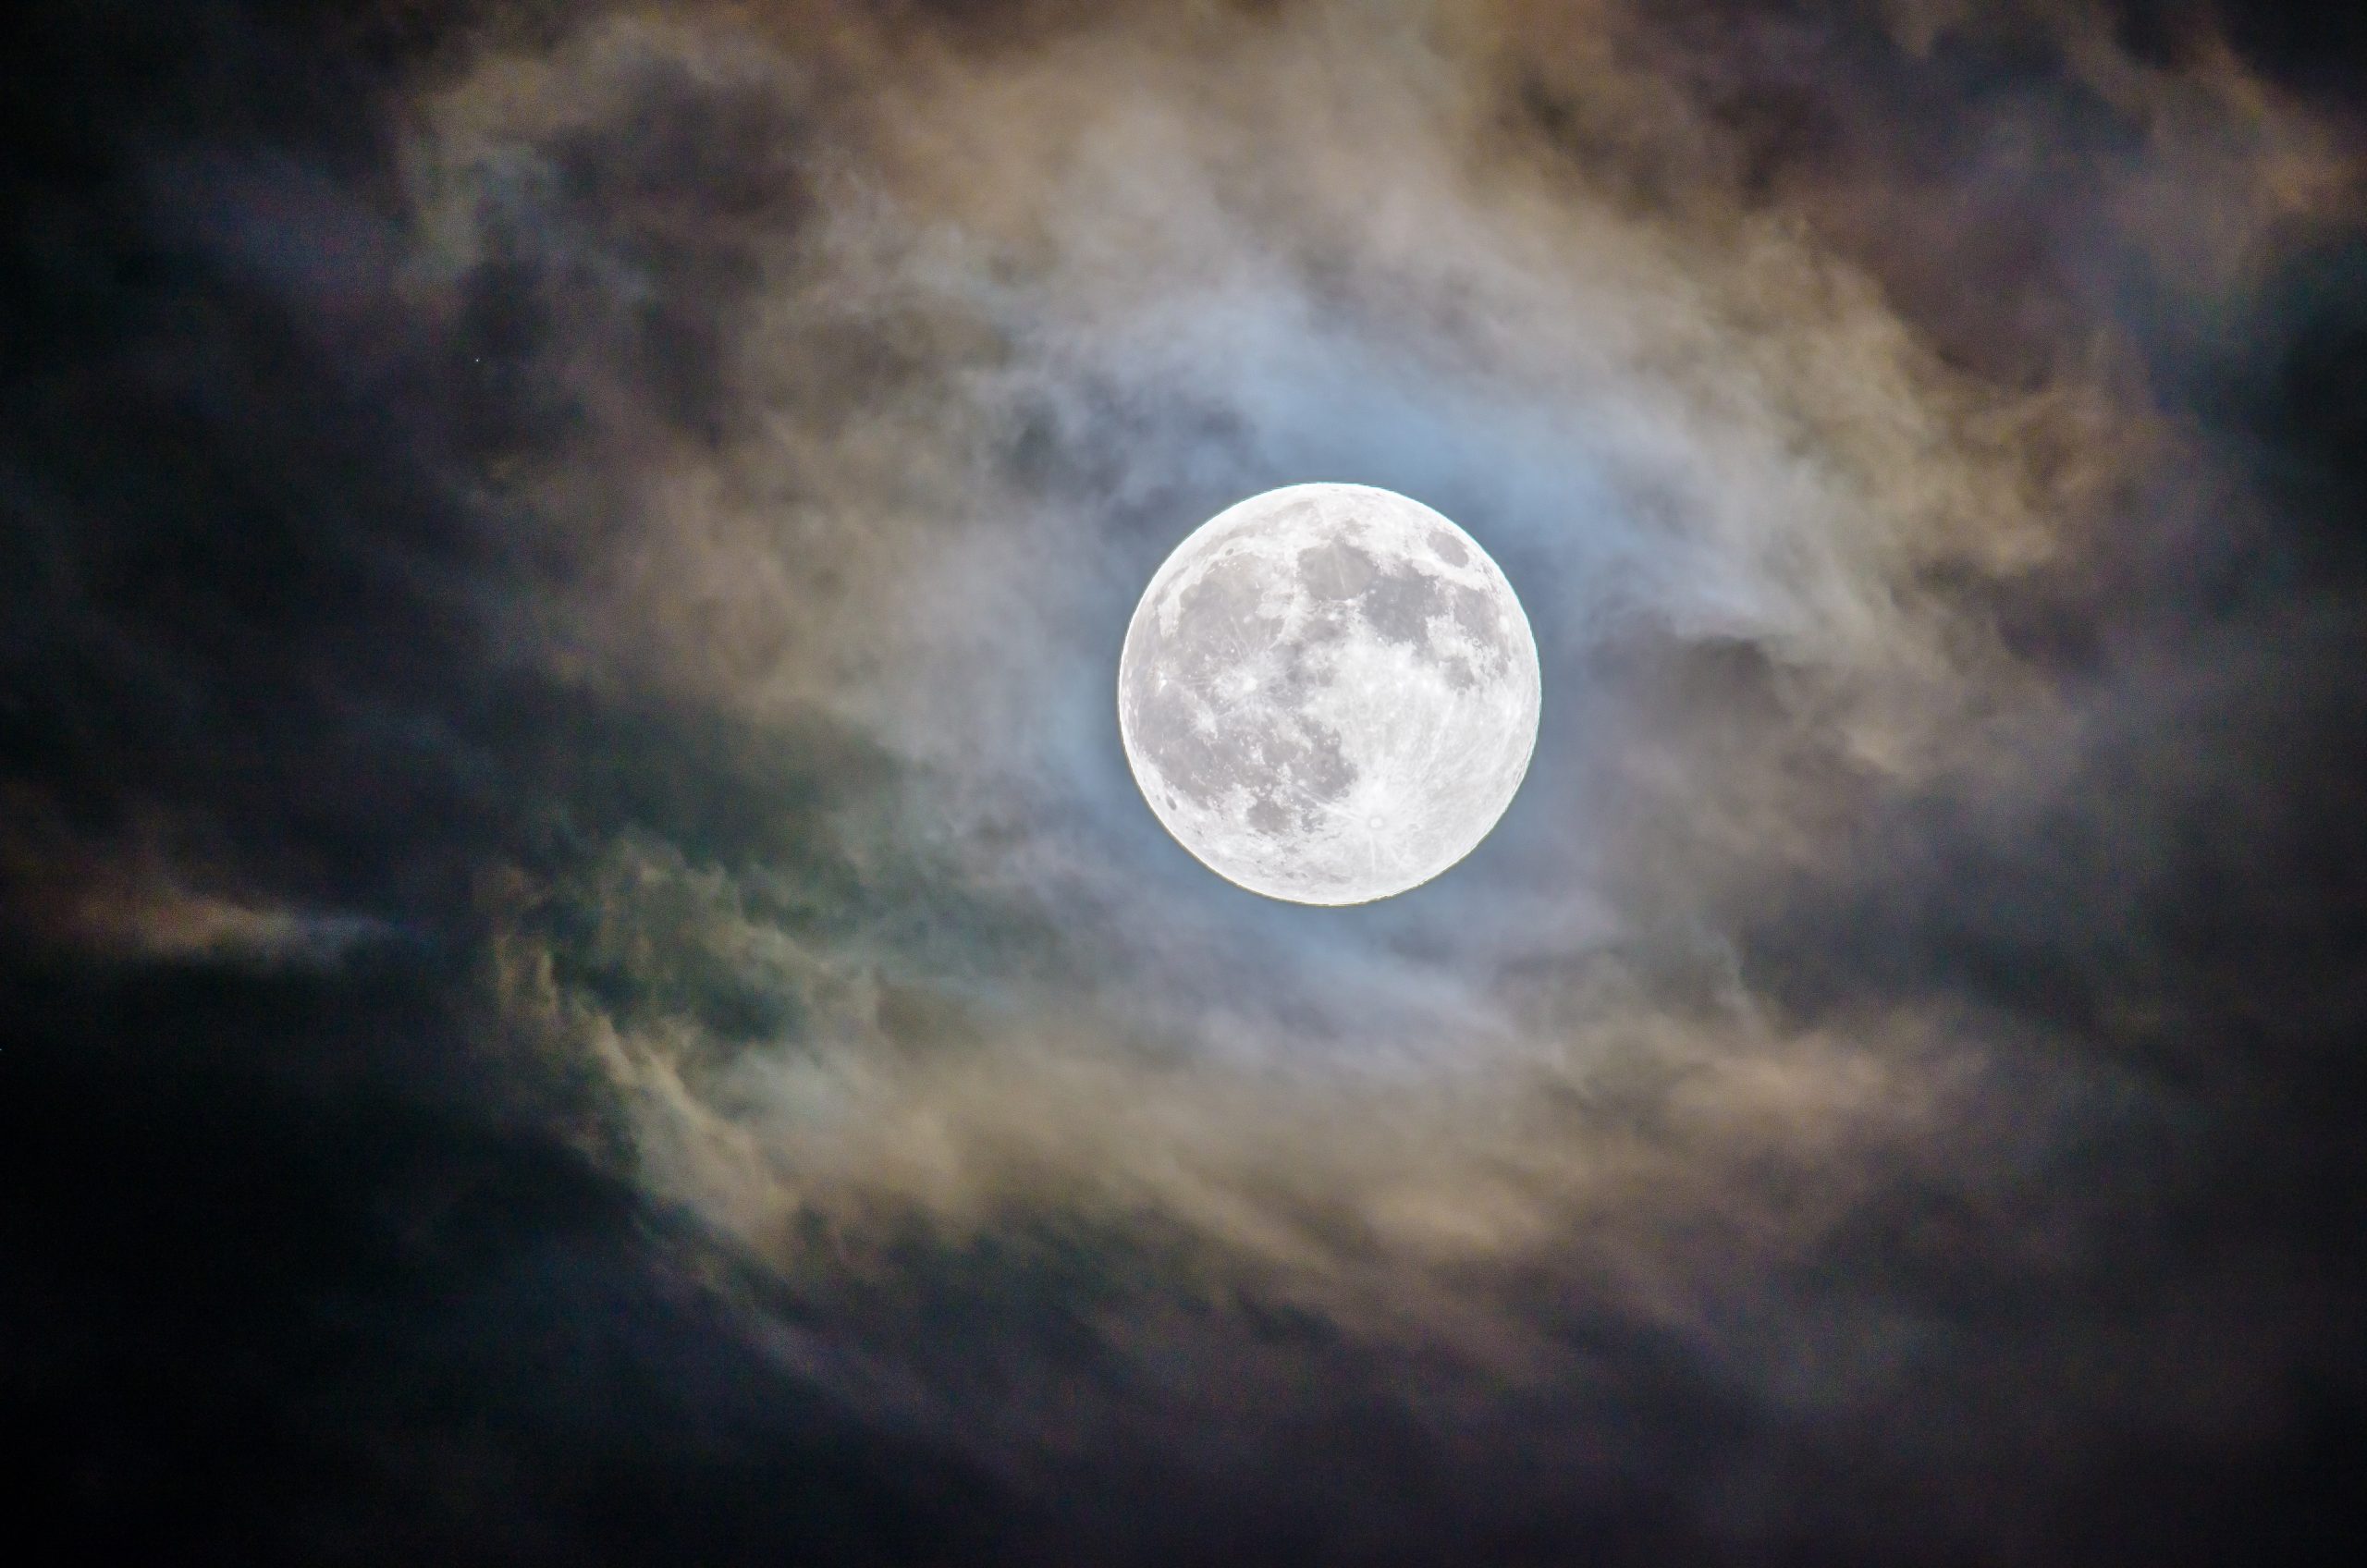 Photo of full moon by Ganapathy Kumar (Unsplash)